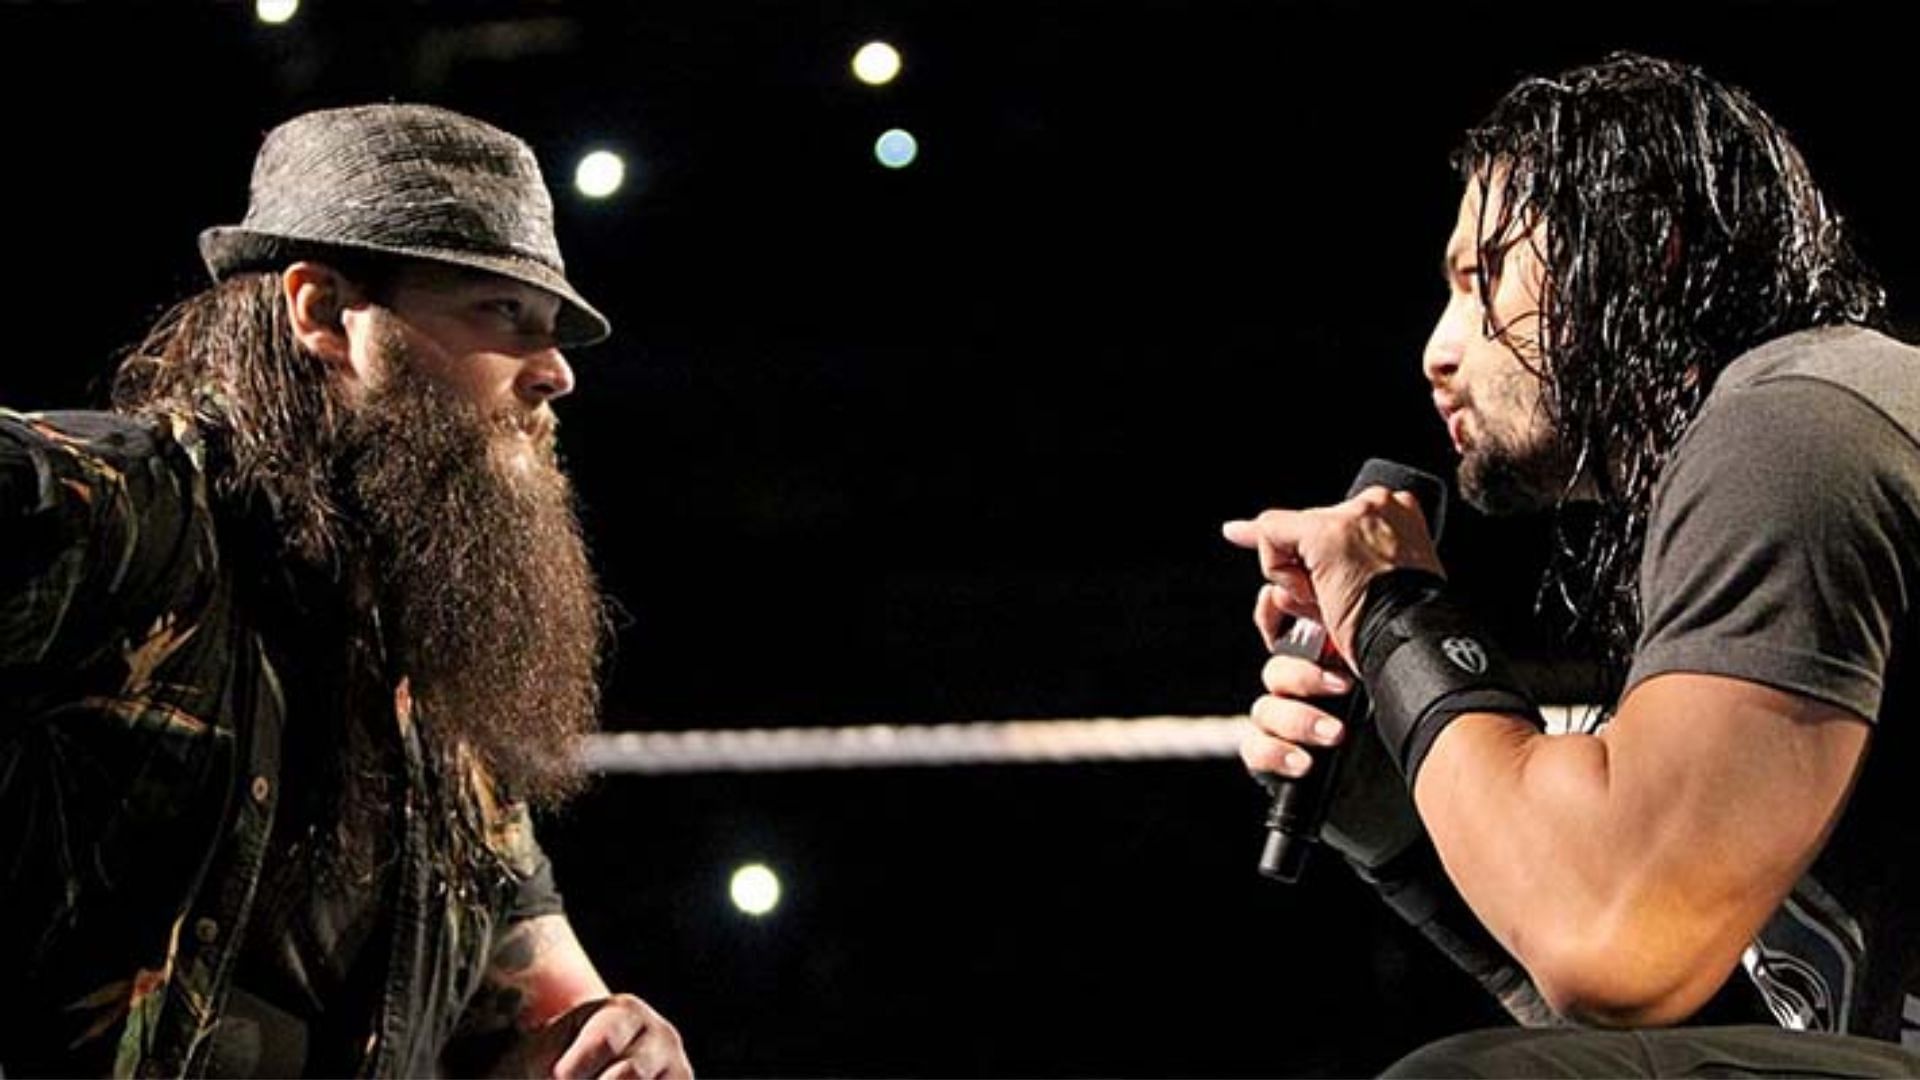 Bray Wyatt and Roman Reigns in 2015